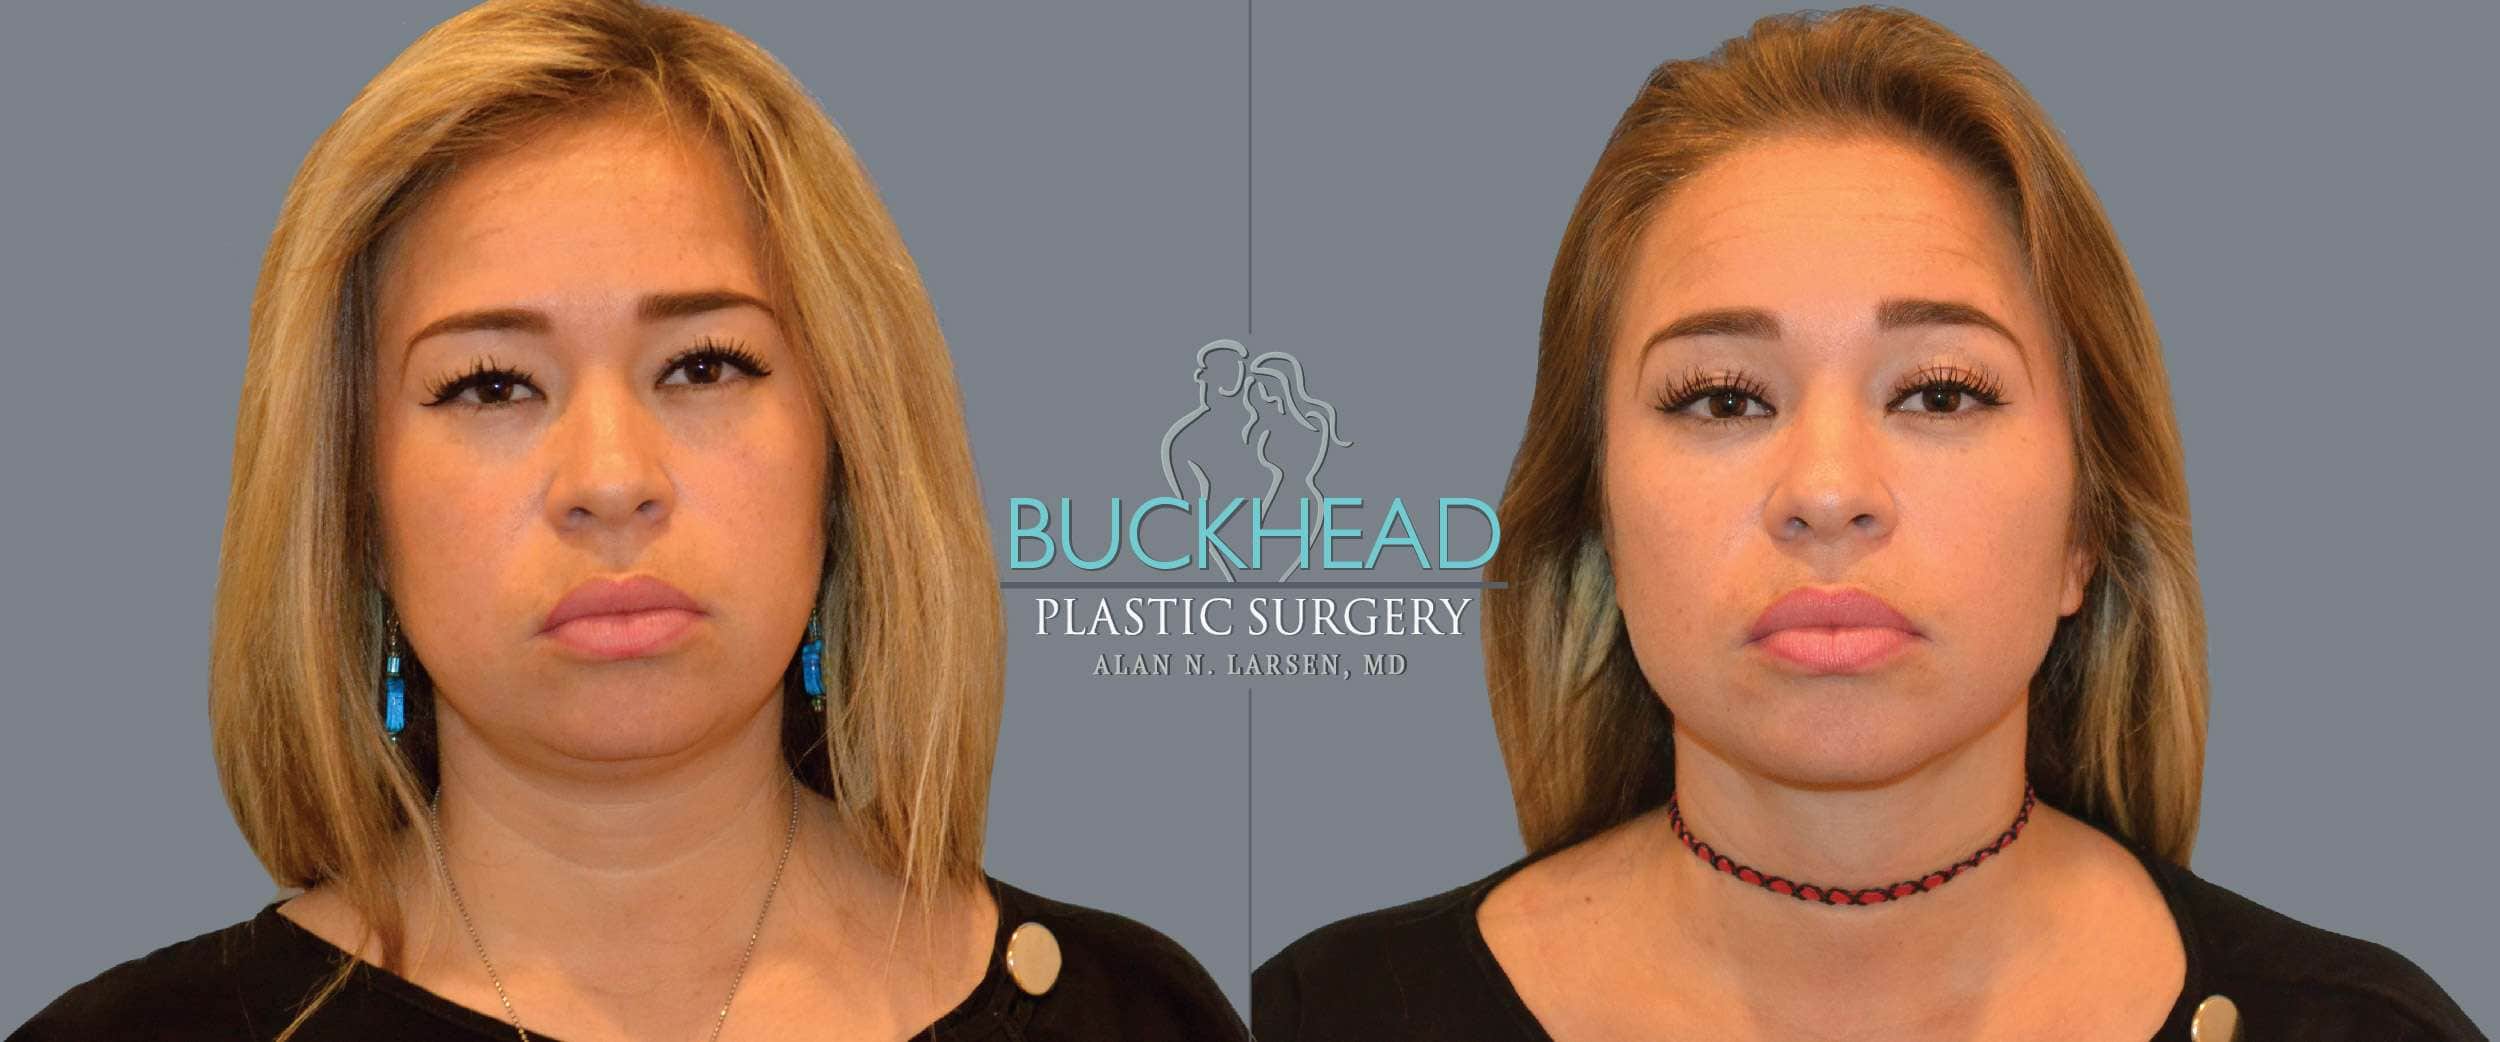 Before and After Photo Gallery | Liposuction - Neck | Buckhead Plastic Surgery | Alan N. Larsen, MD | Double Board-Certified Plastic Surgeon | Atlanta GA